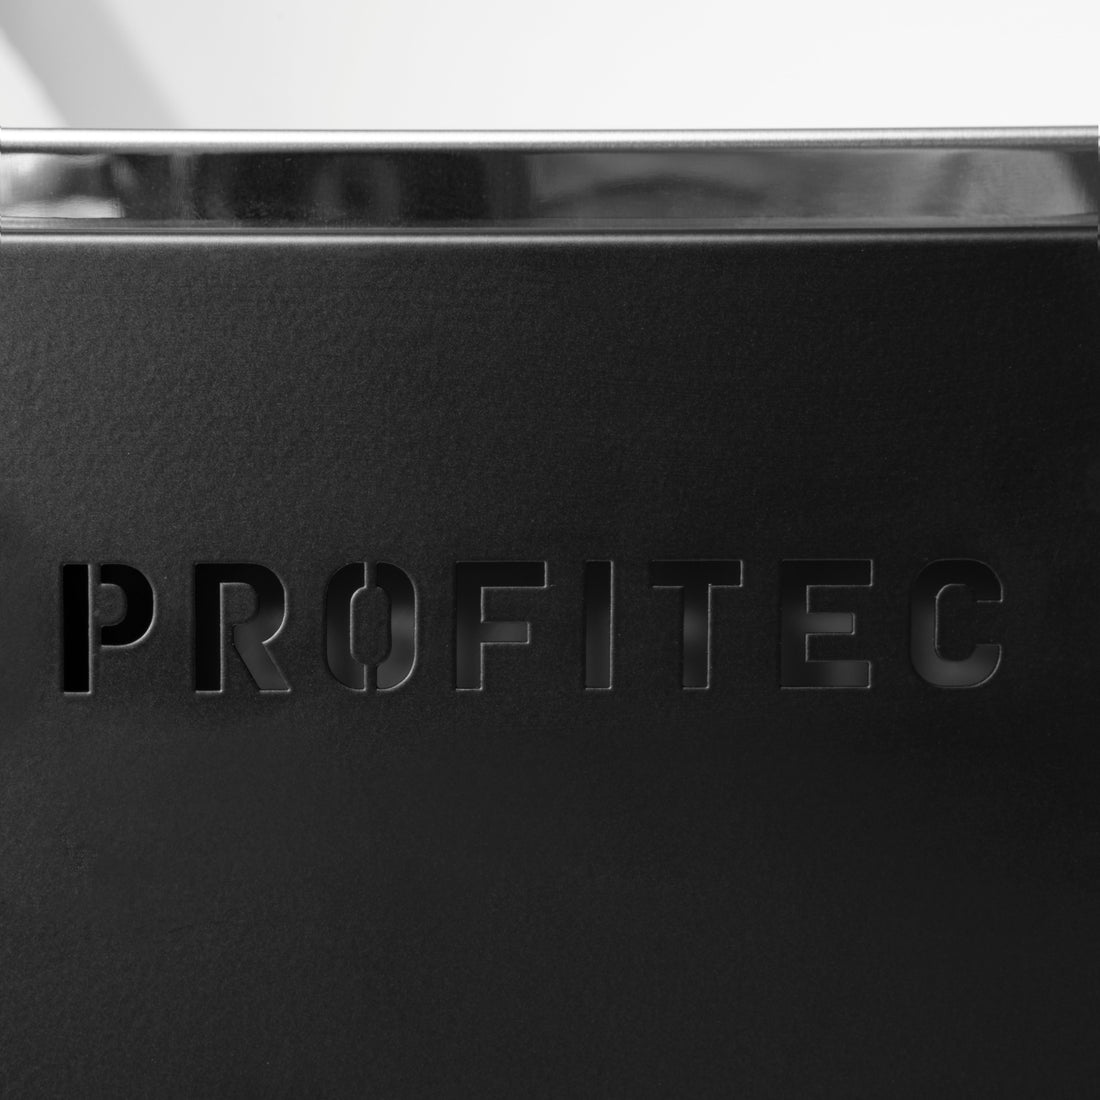 Profitec GO Espresso Machine - Black with Tiger Maple